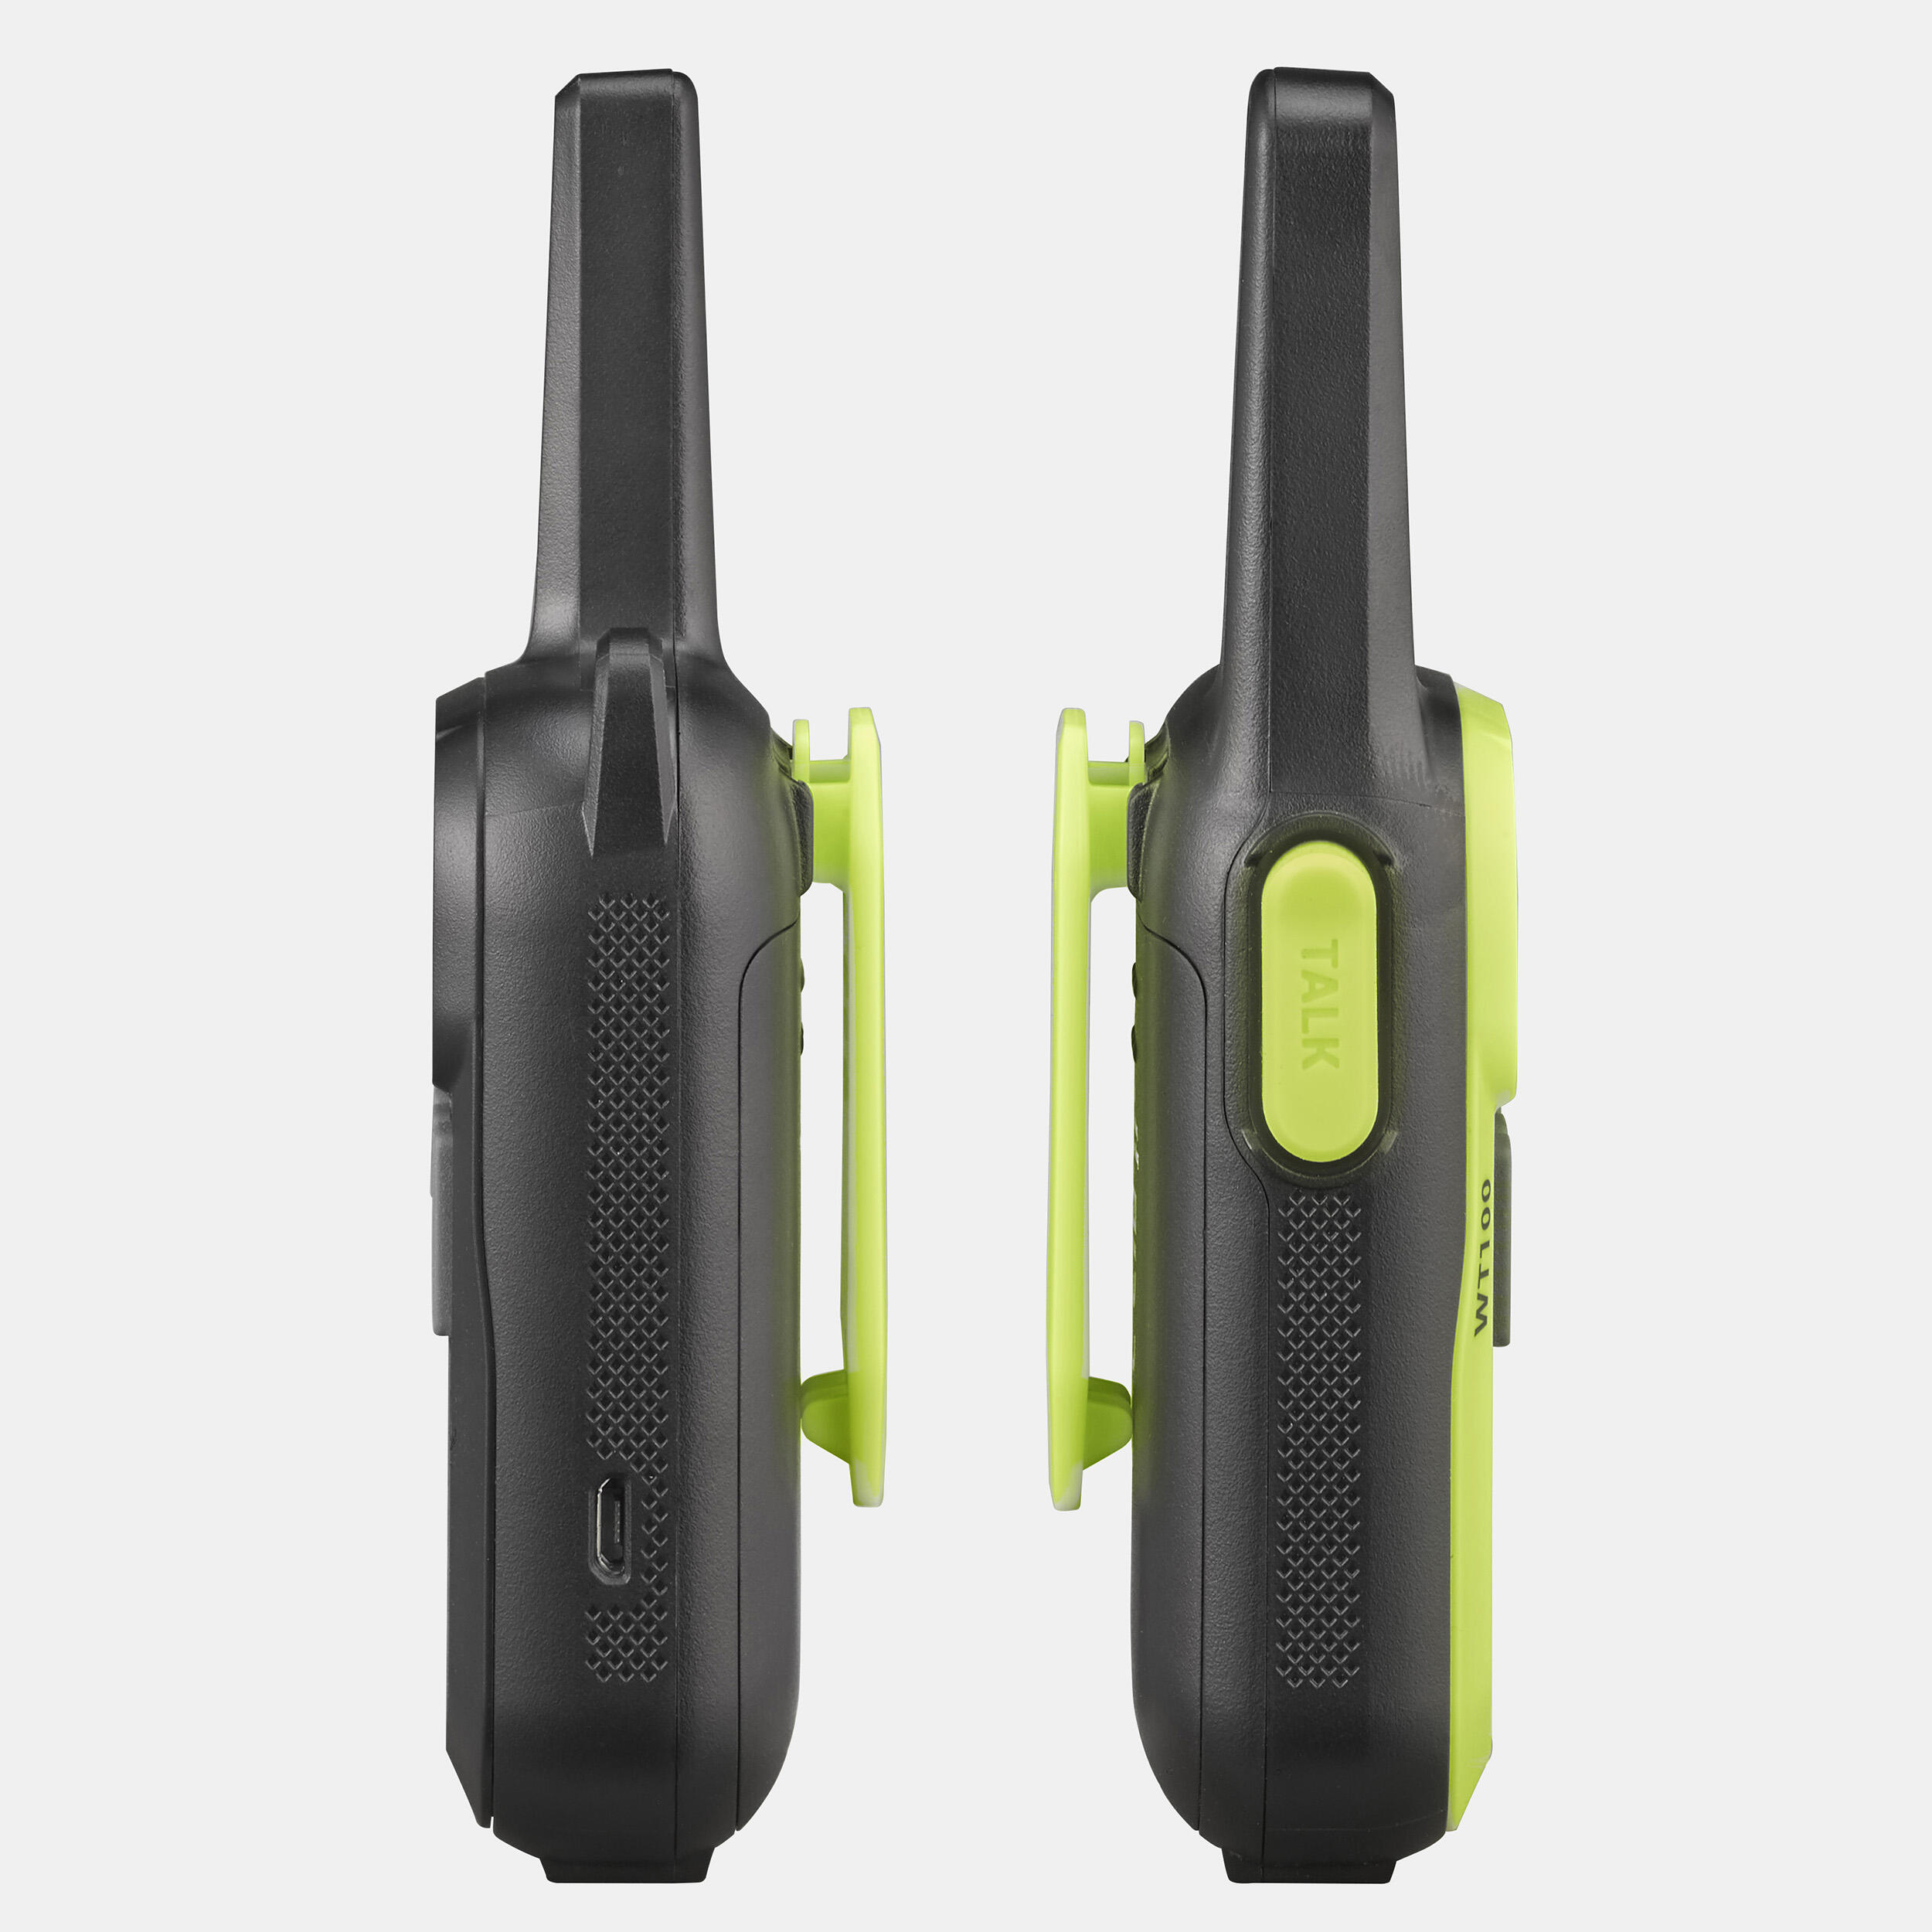 Pair of USB rechargeable walkie talkies - 5 km - WT100 7/8